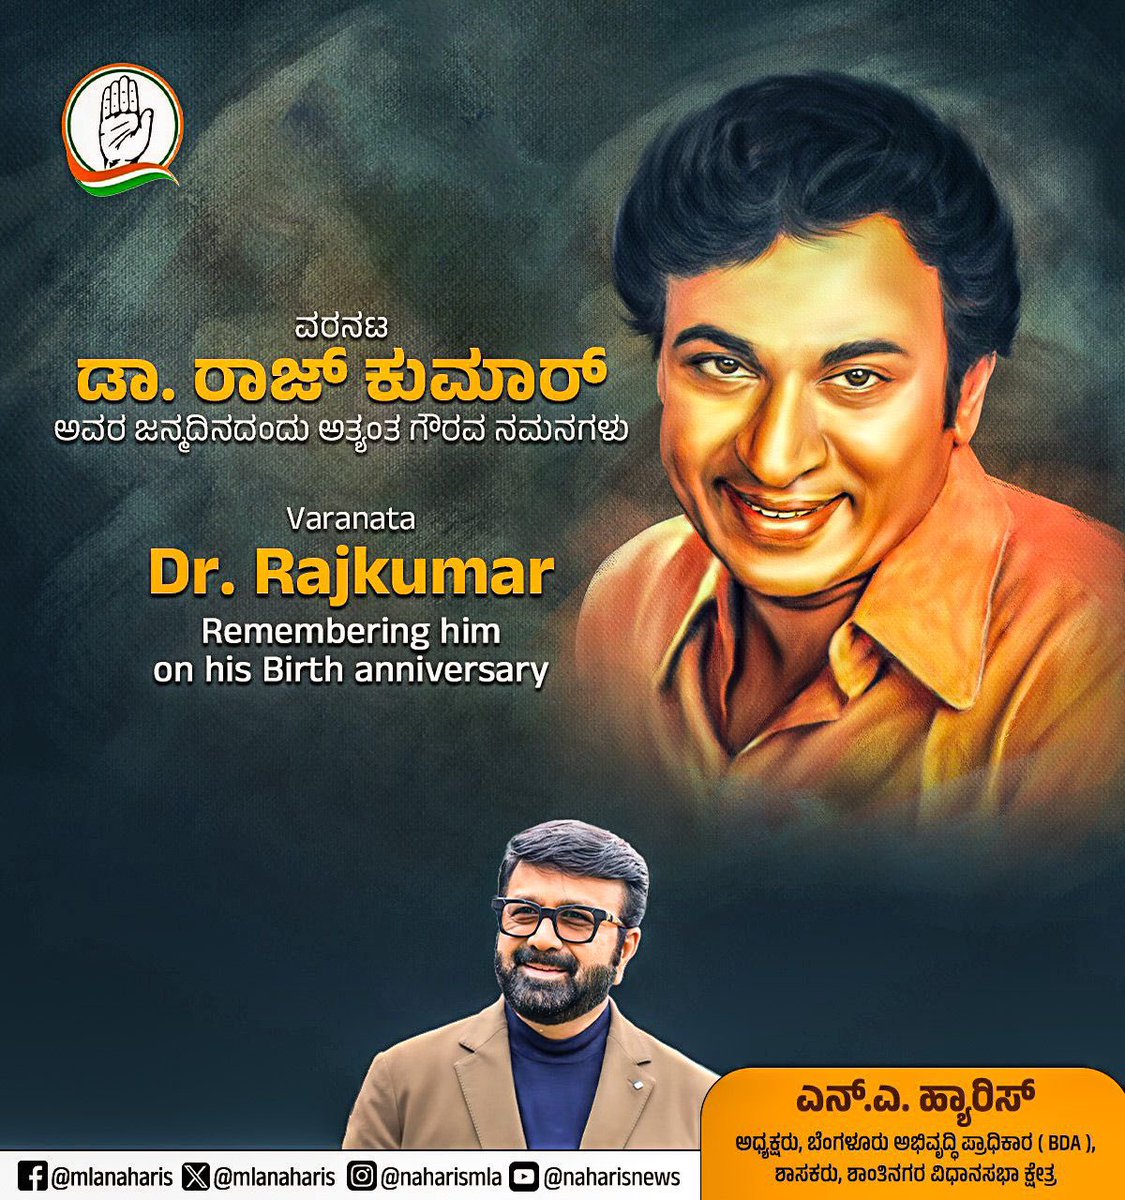 Remembering the veteran and legendary actor Dr Rajkumar on his Birth Anniversary. #DrRajkumar #varanata